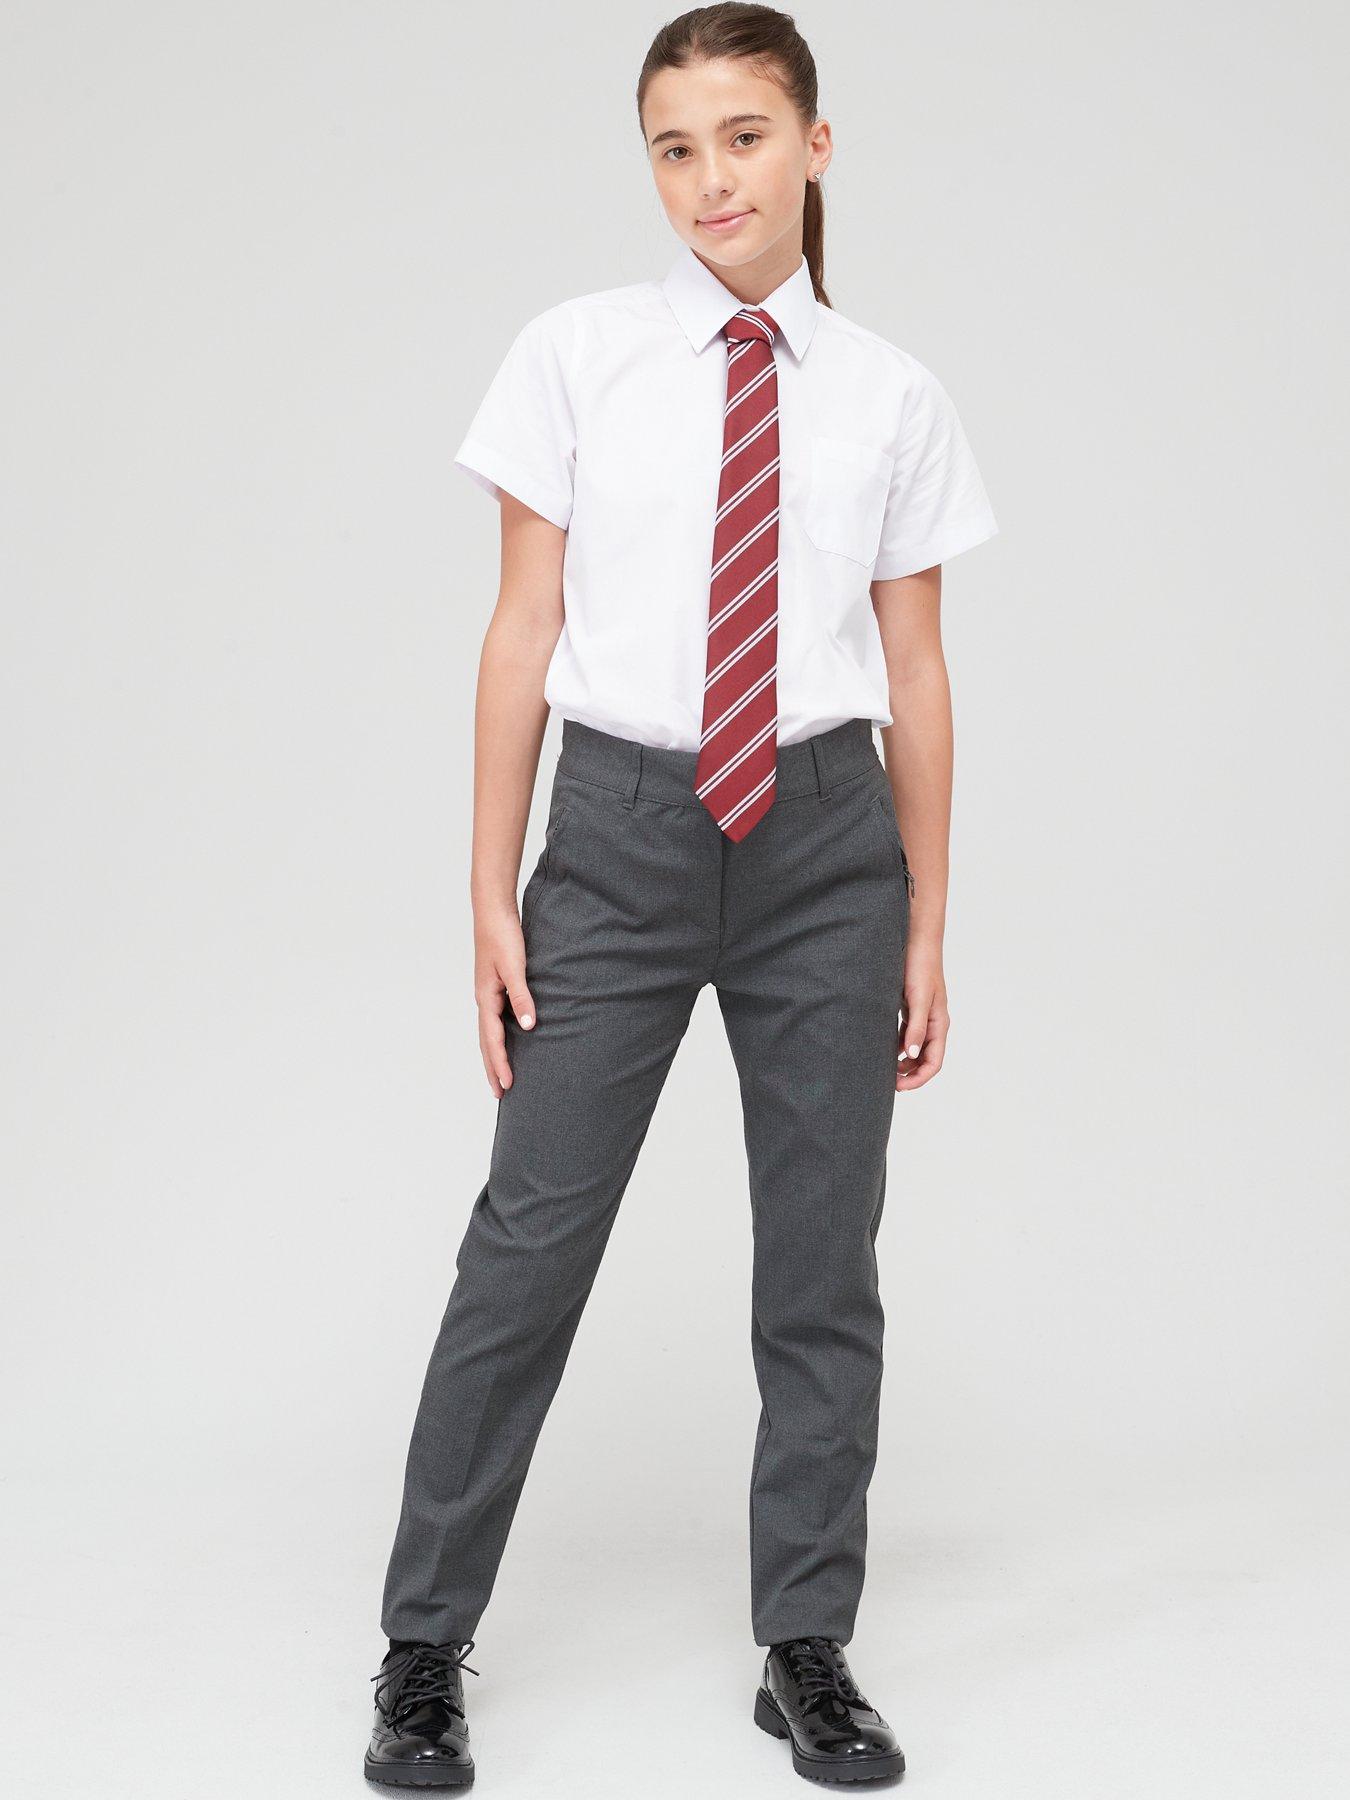 Girls Brown School Trousers - Hipser Flare | Brown School Uniform